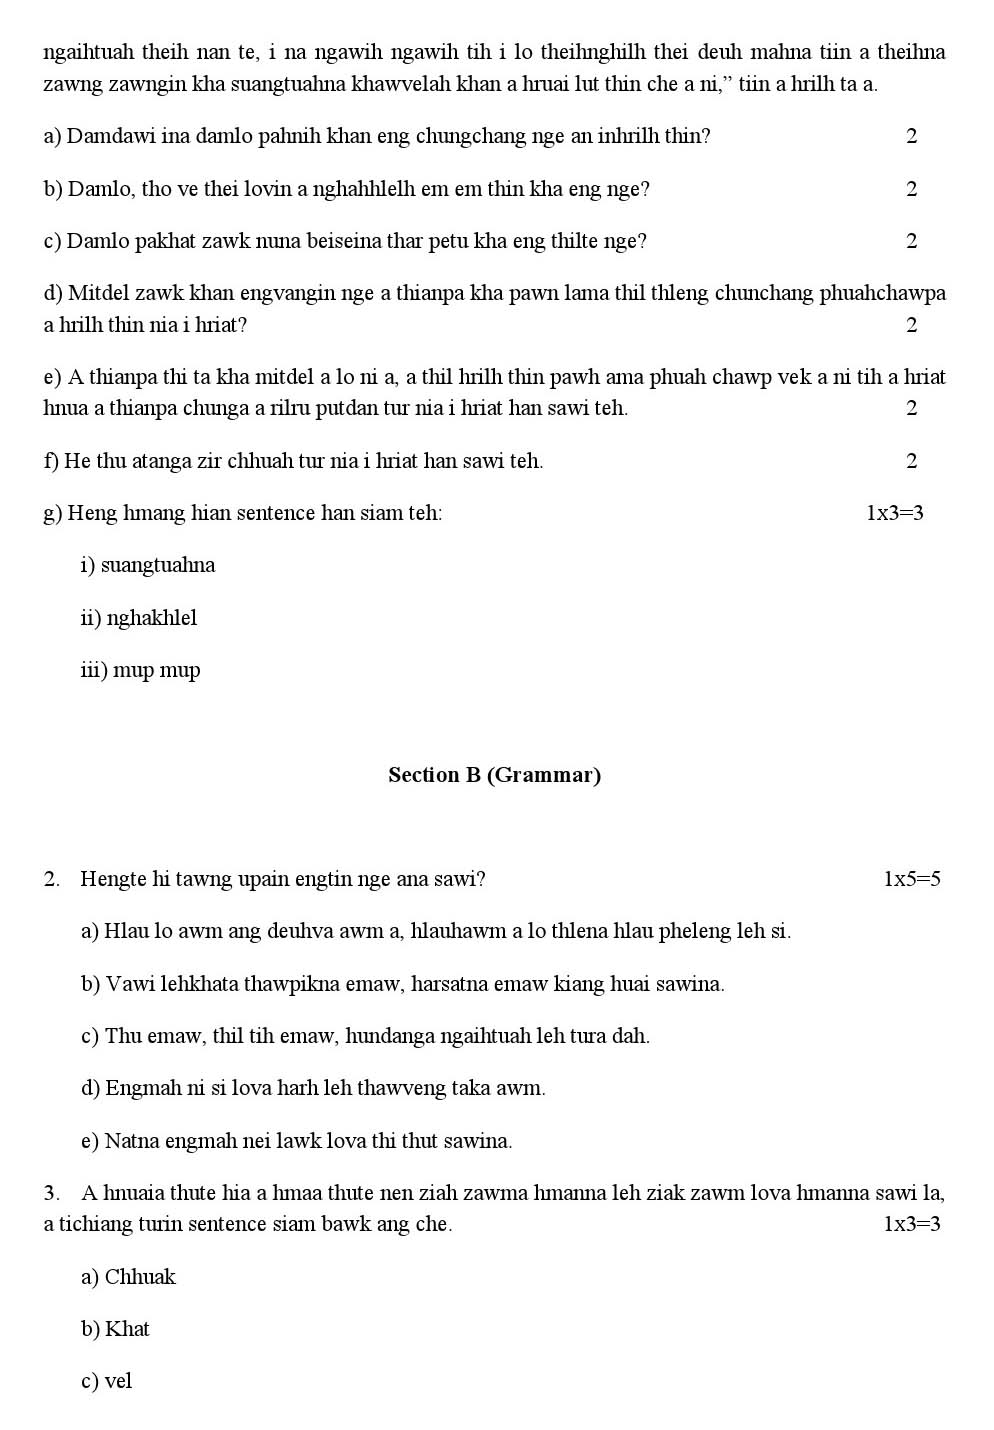 Mizo CBSE Class X Sample Question Paper 2018-19 - Image 2